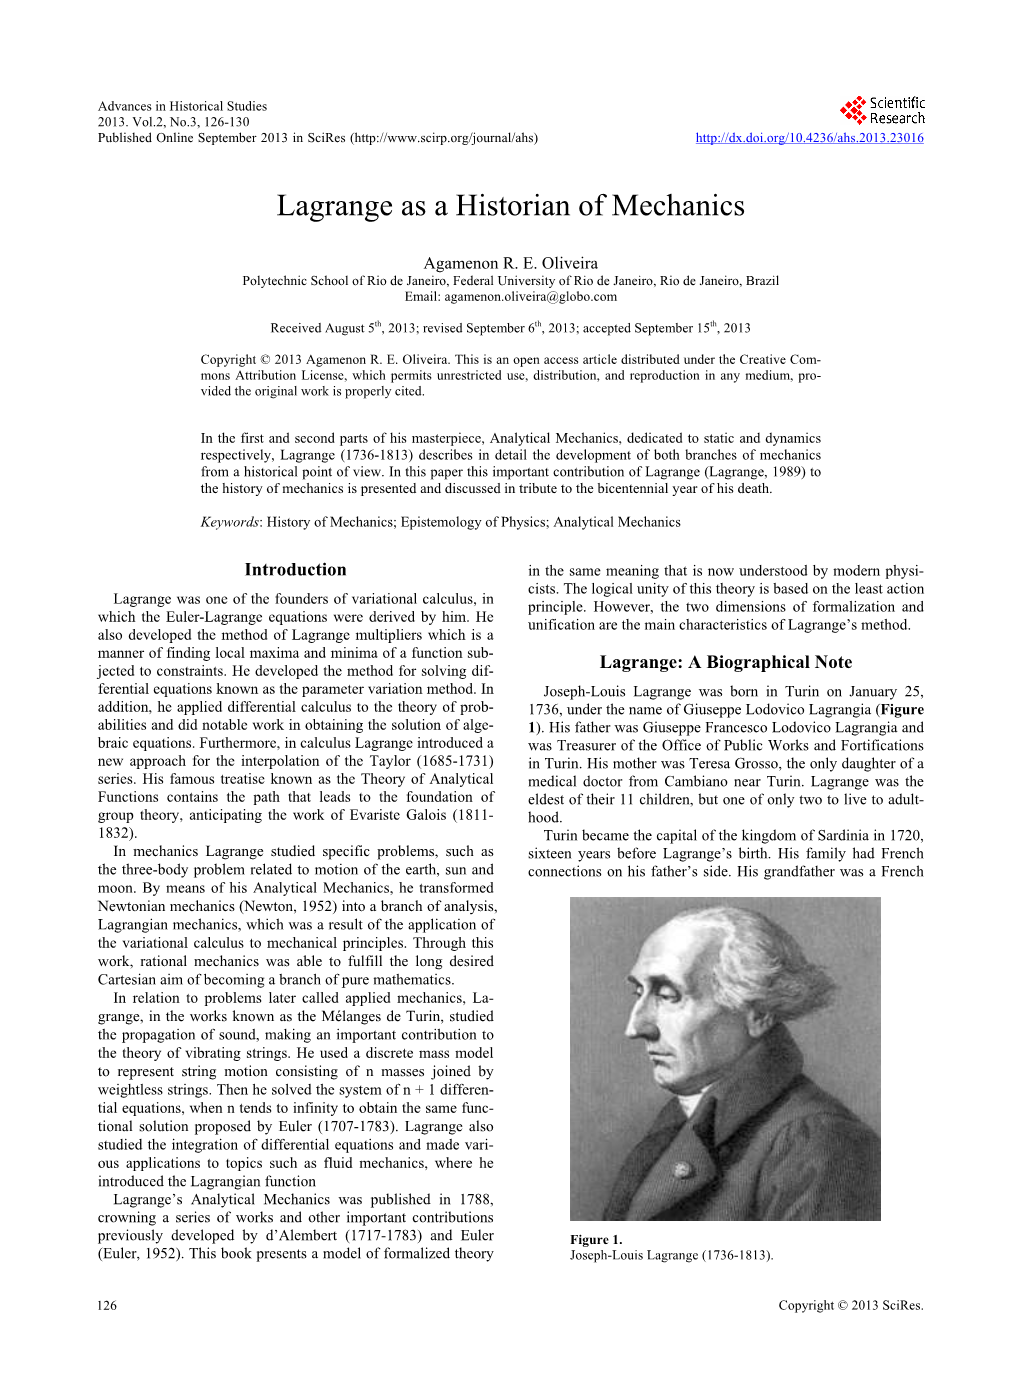 Lagrange As a Historian of Mechanics